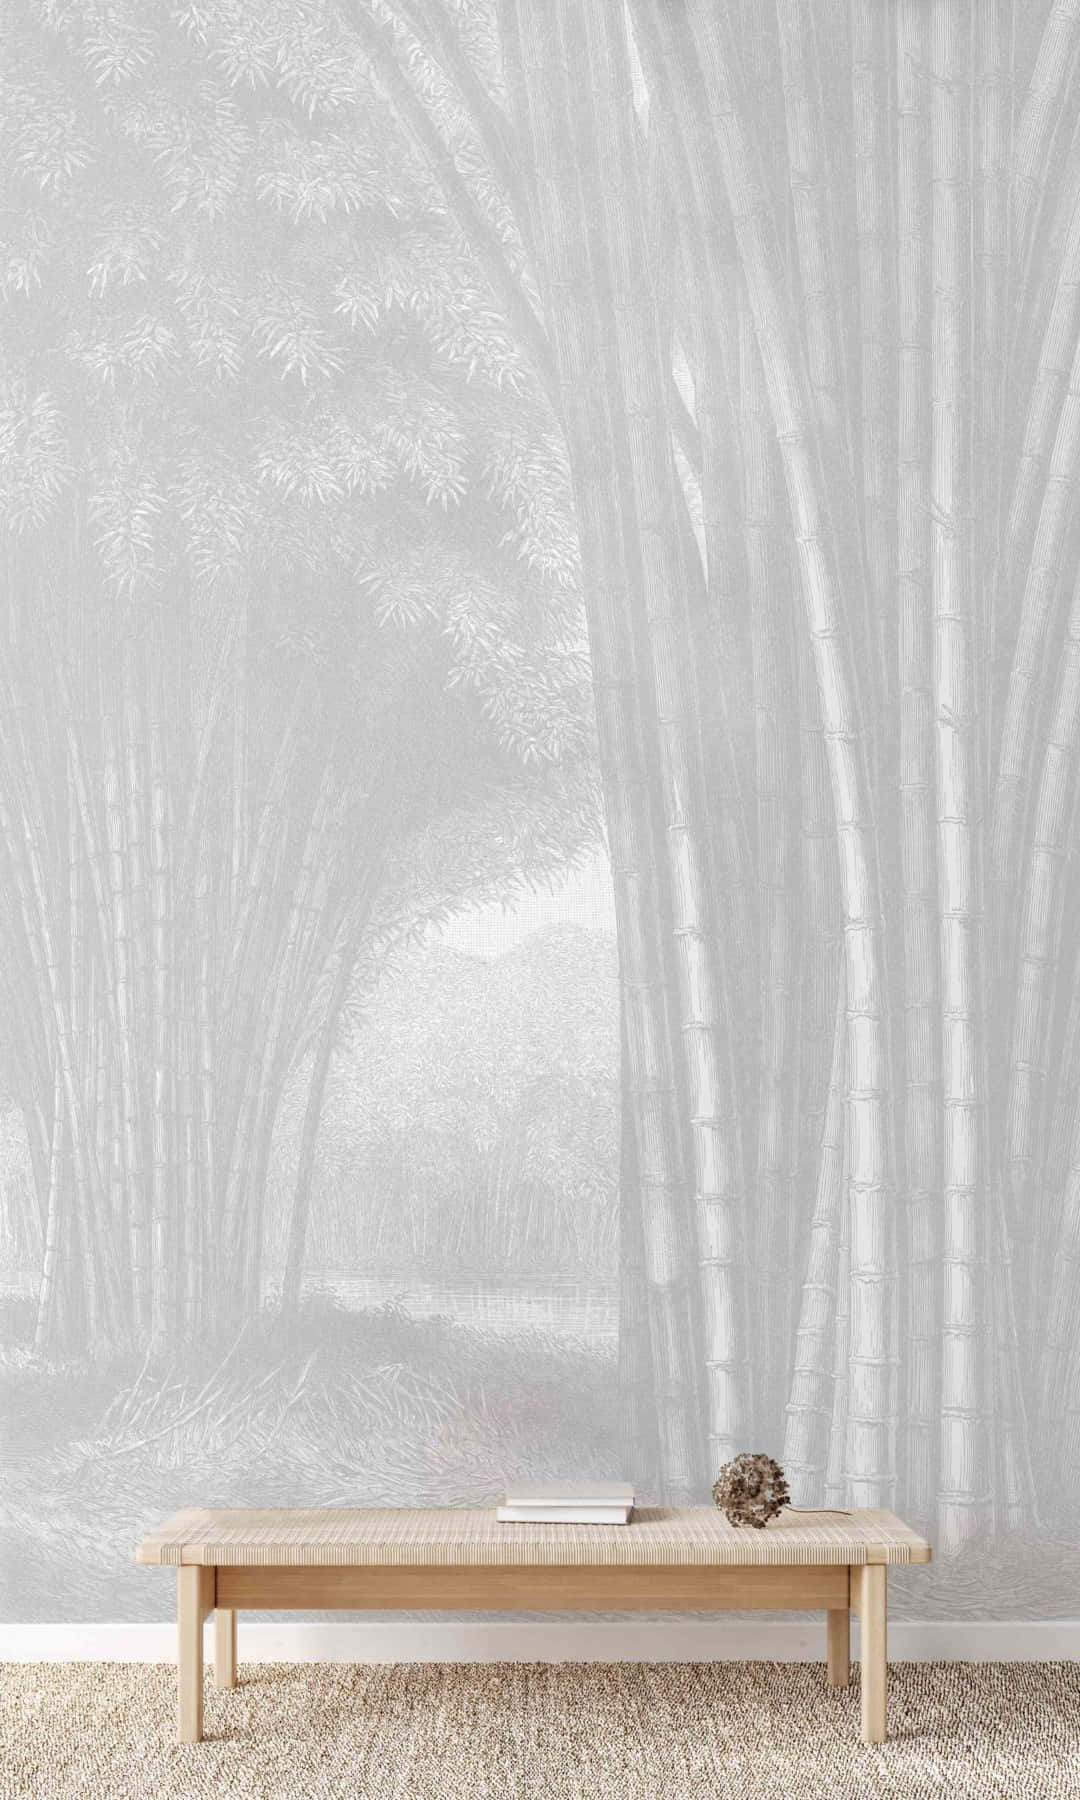 Untranquilo Paseo Por Un Exuberante Bosque De Bambú. Fondo de pantalla